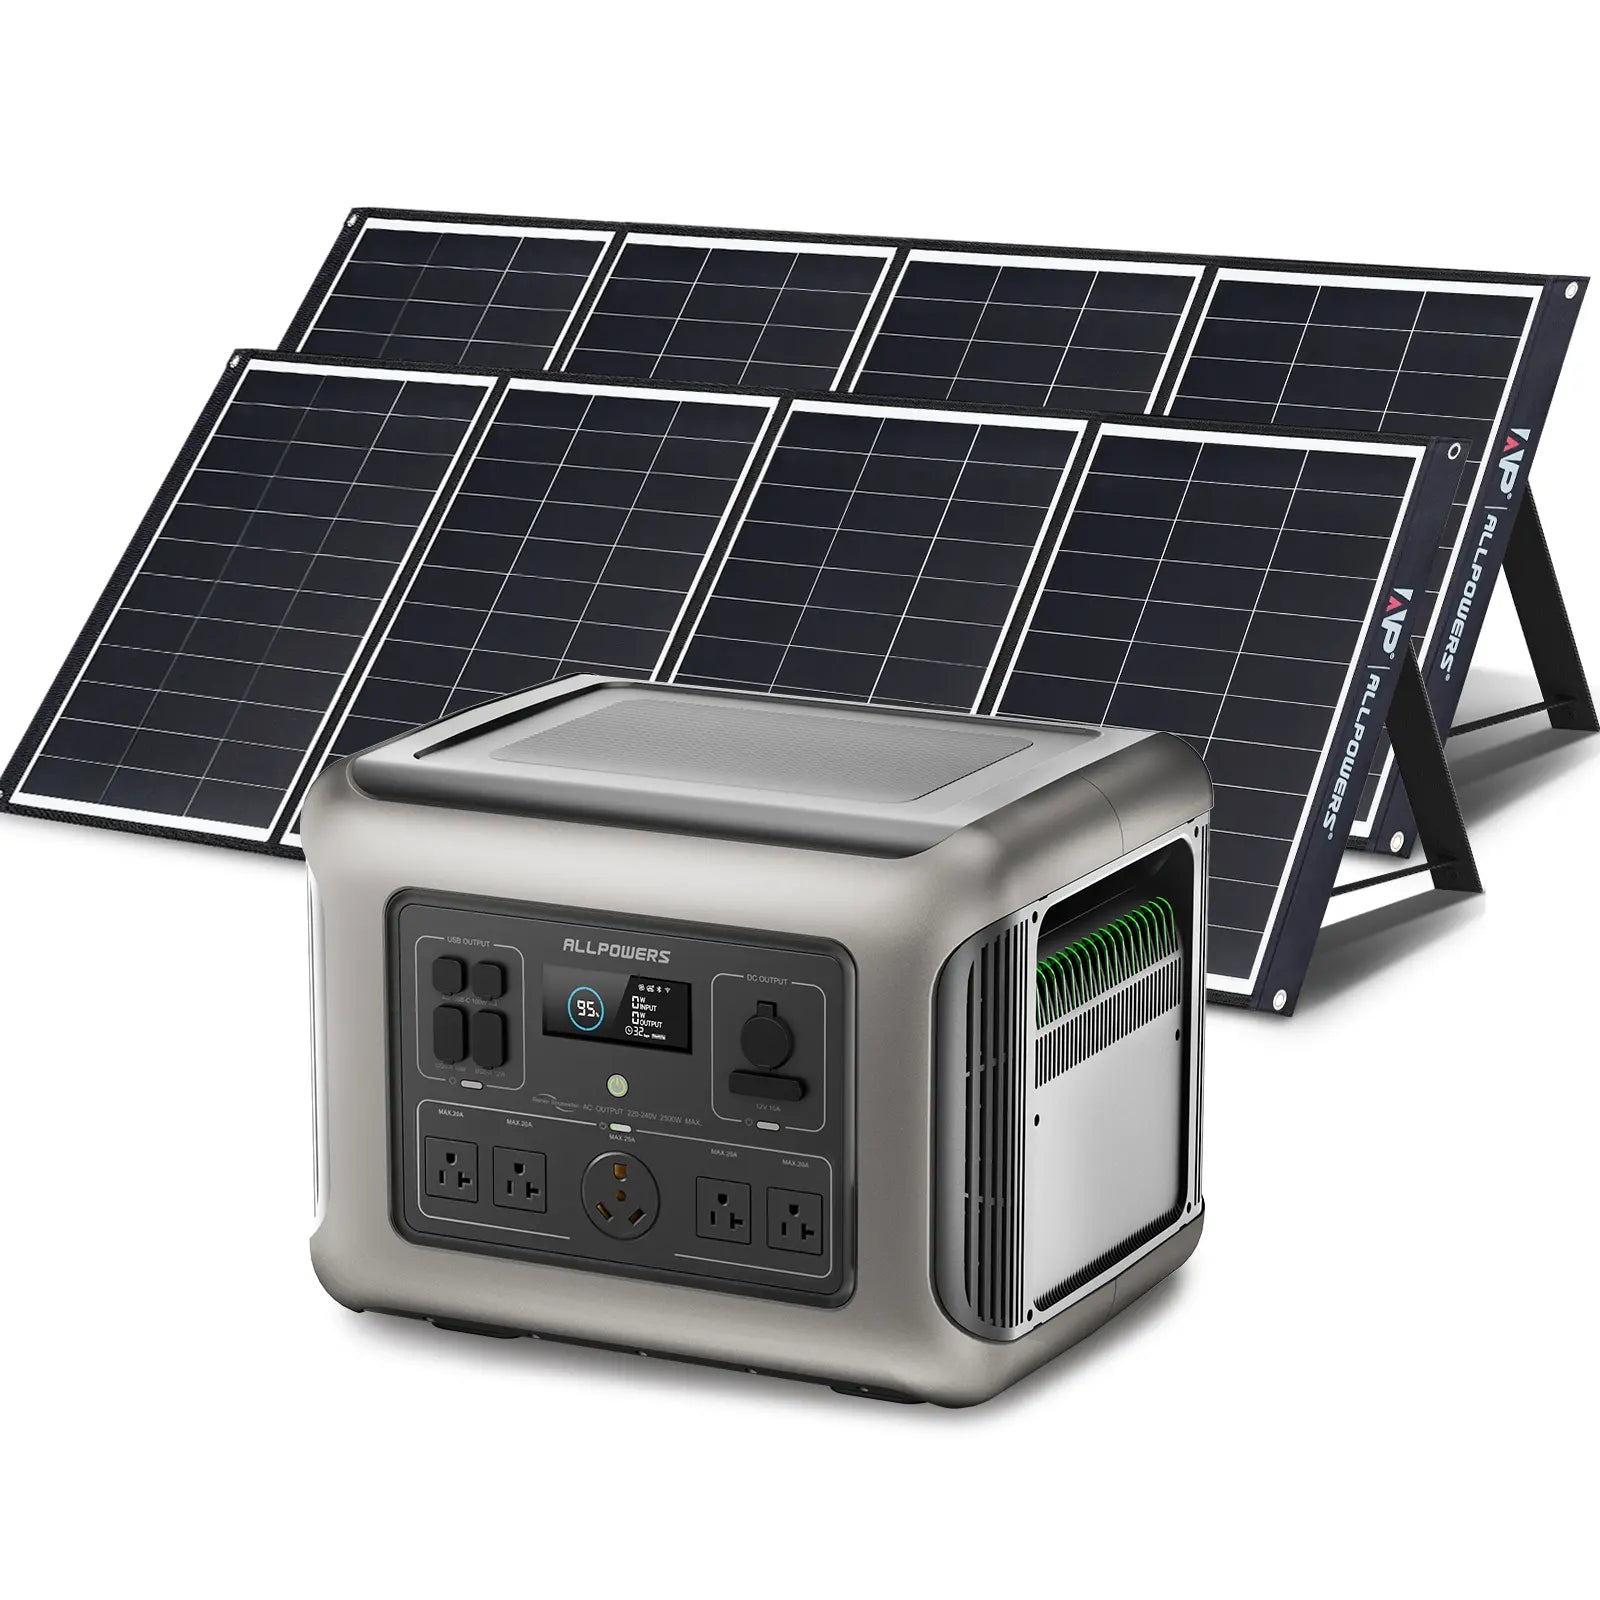 ALLPOWERS Solar Generator Kit 2500W (R2500 + 2 x SP035 200W Solar Panel)